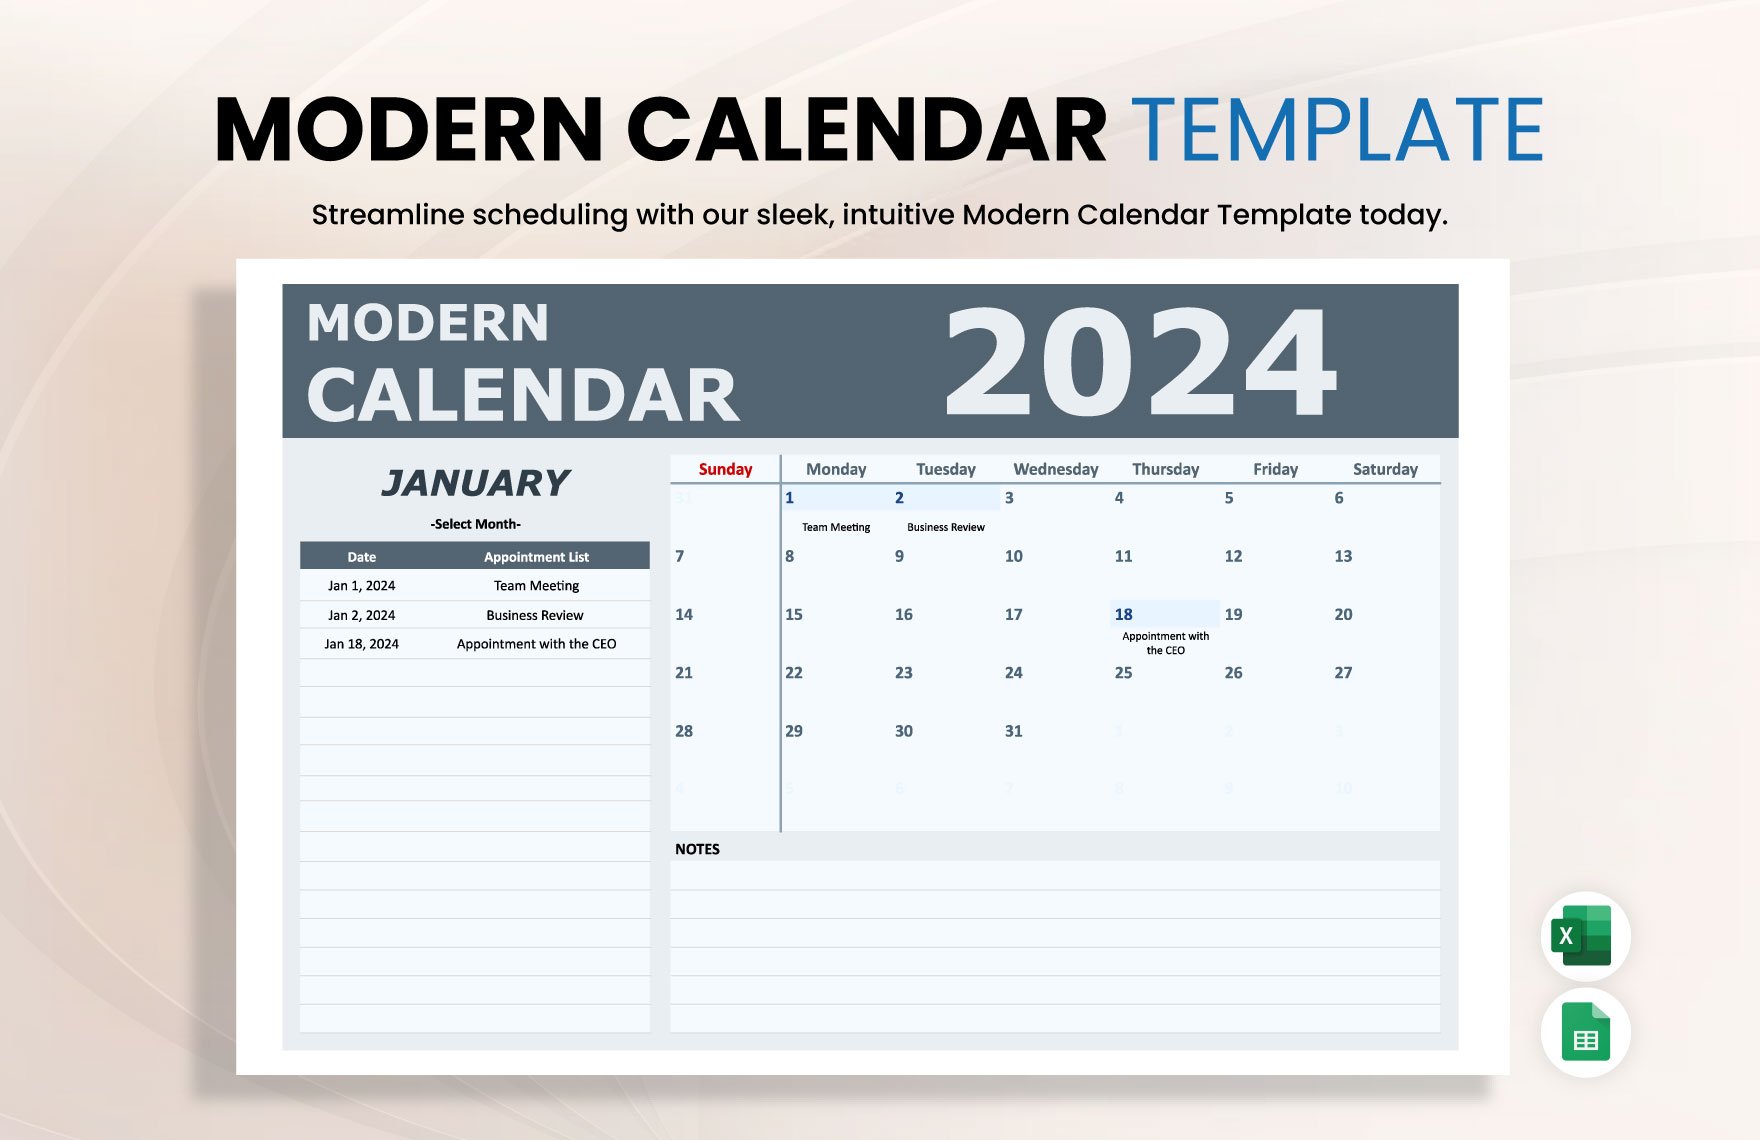 Modern Calendar Template in Excel, Google Sheets